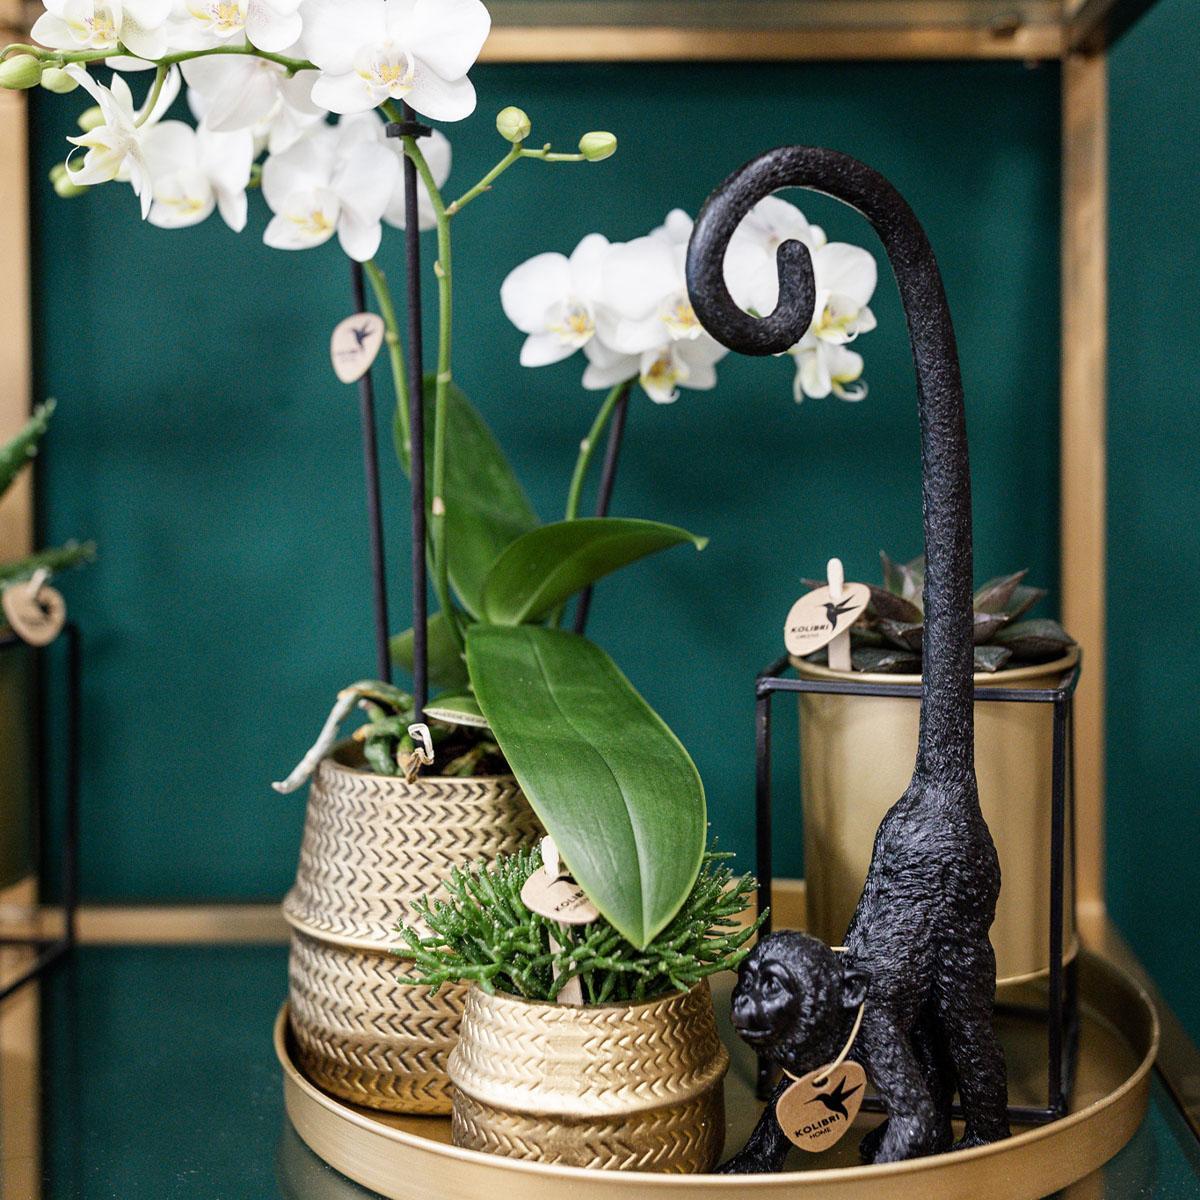 Kolibri Company - Planten set Groove goud | Set met witte Phalaenopsis orchidee Amabilis Ø9cm en groene plant Succulent Crassula Ovata Ø6cm  | incl. gouden keramieken sierpotten